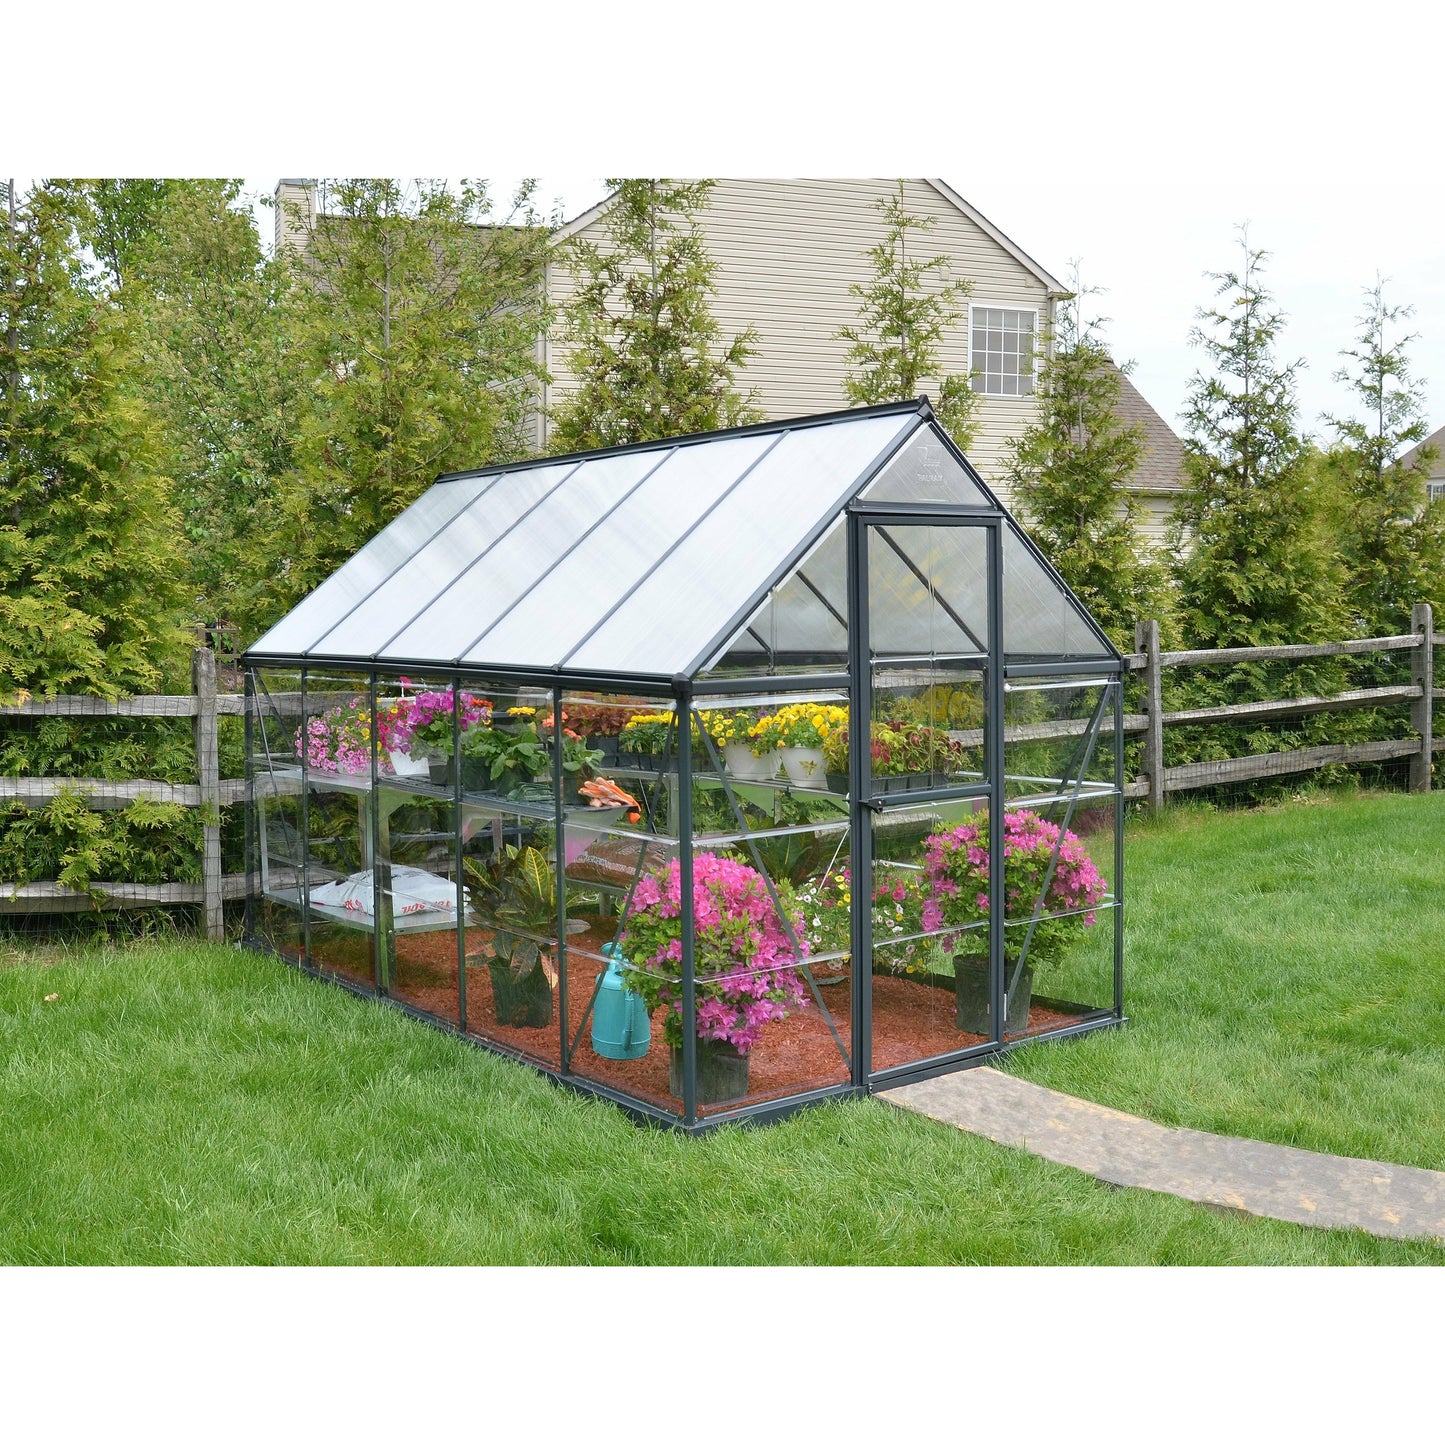 Palram Hybrid 6' x 10' Greenhouse - Gray